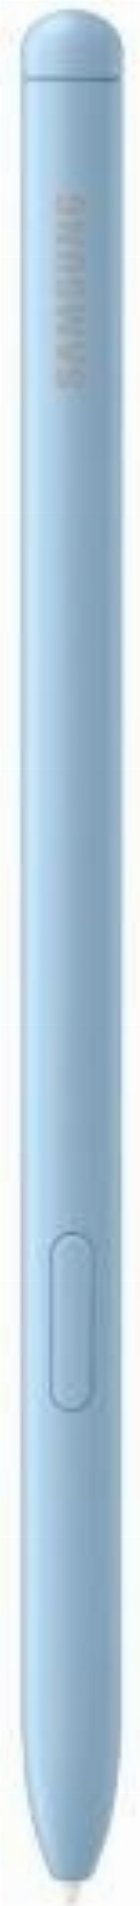 Stylus Pen Samsung EJ-PP610BLEGEU pentru Samsung Galaxy Tab S6 Lite (Albastru)